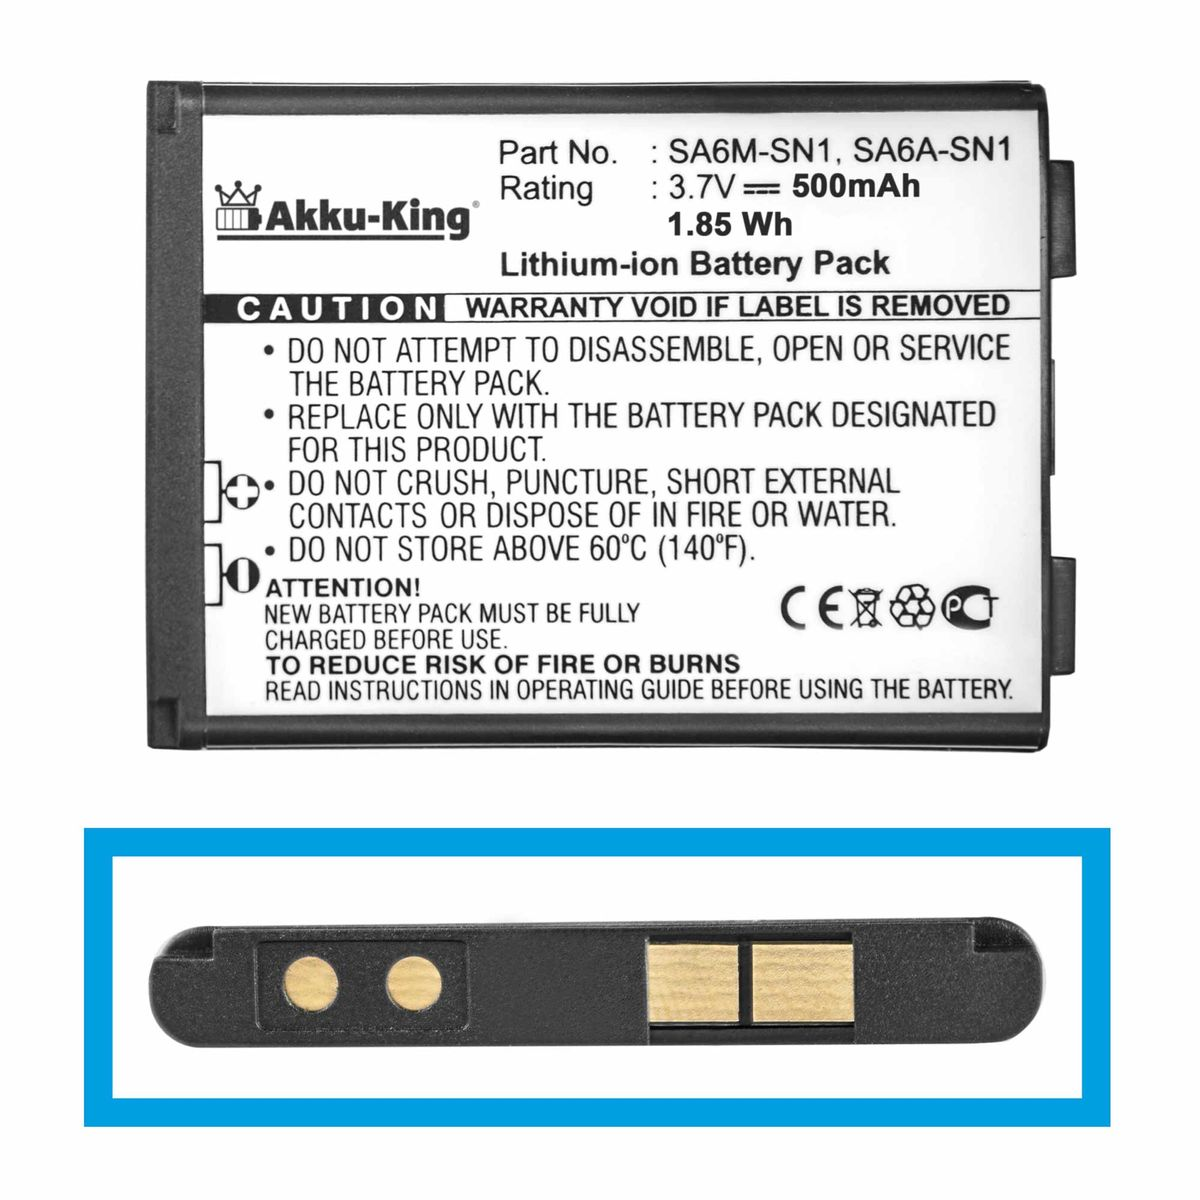 AKKU-KING Akku kompatibel 500mAh Sagem Li-Ion 3.7 SA8A-SN5 Handy-Akku, Volt, mit